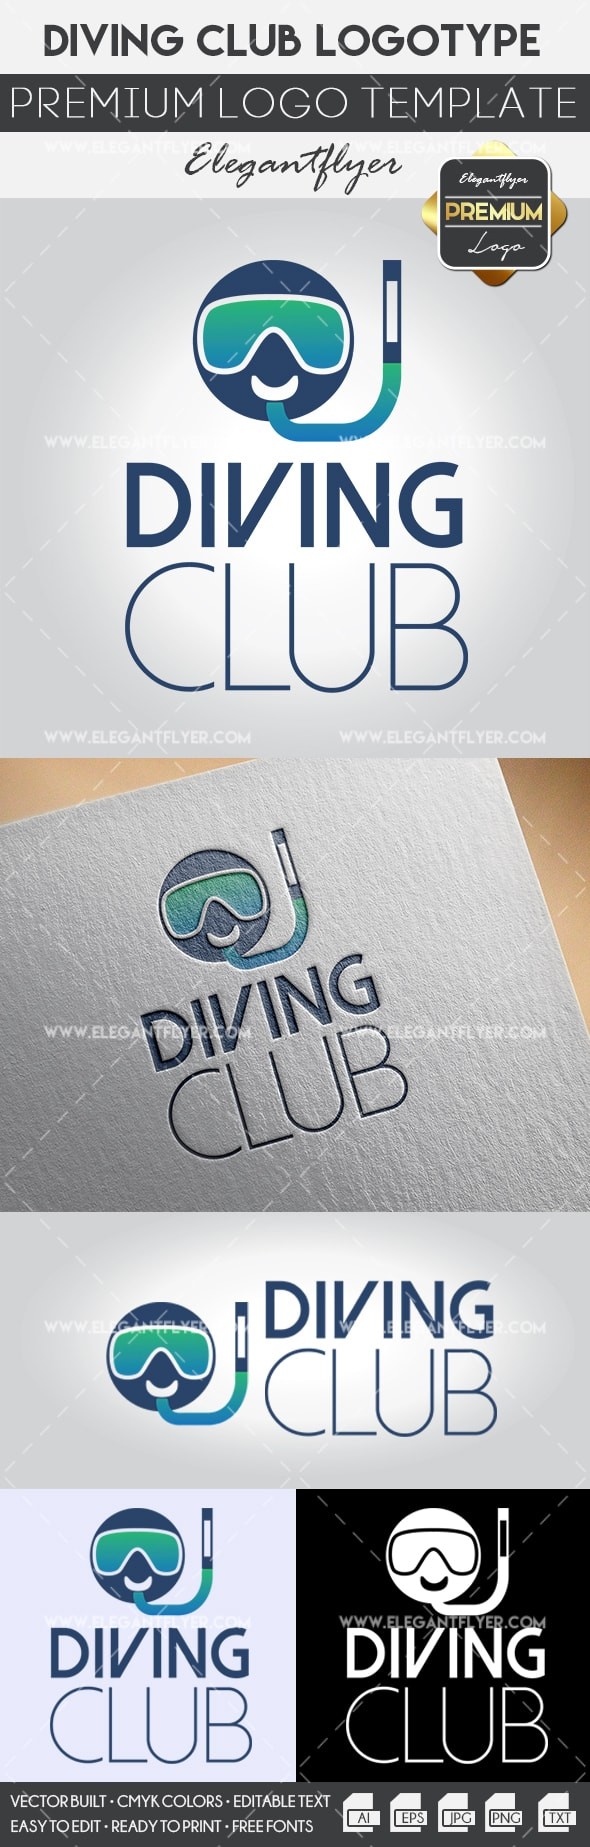 diving-club-premium-logo-template-10019265-by-elegantflyer